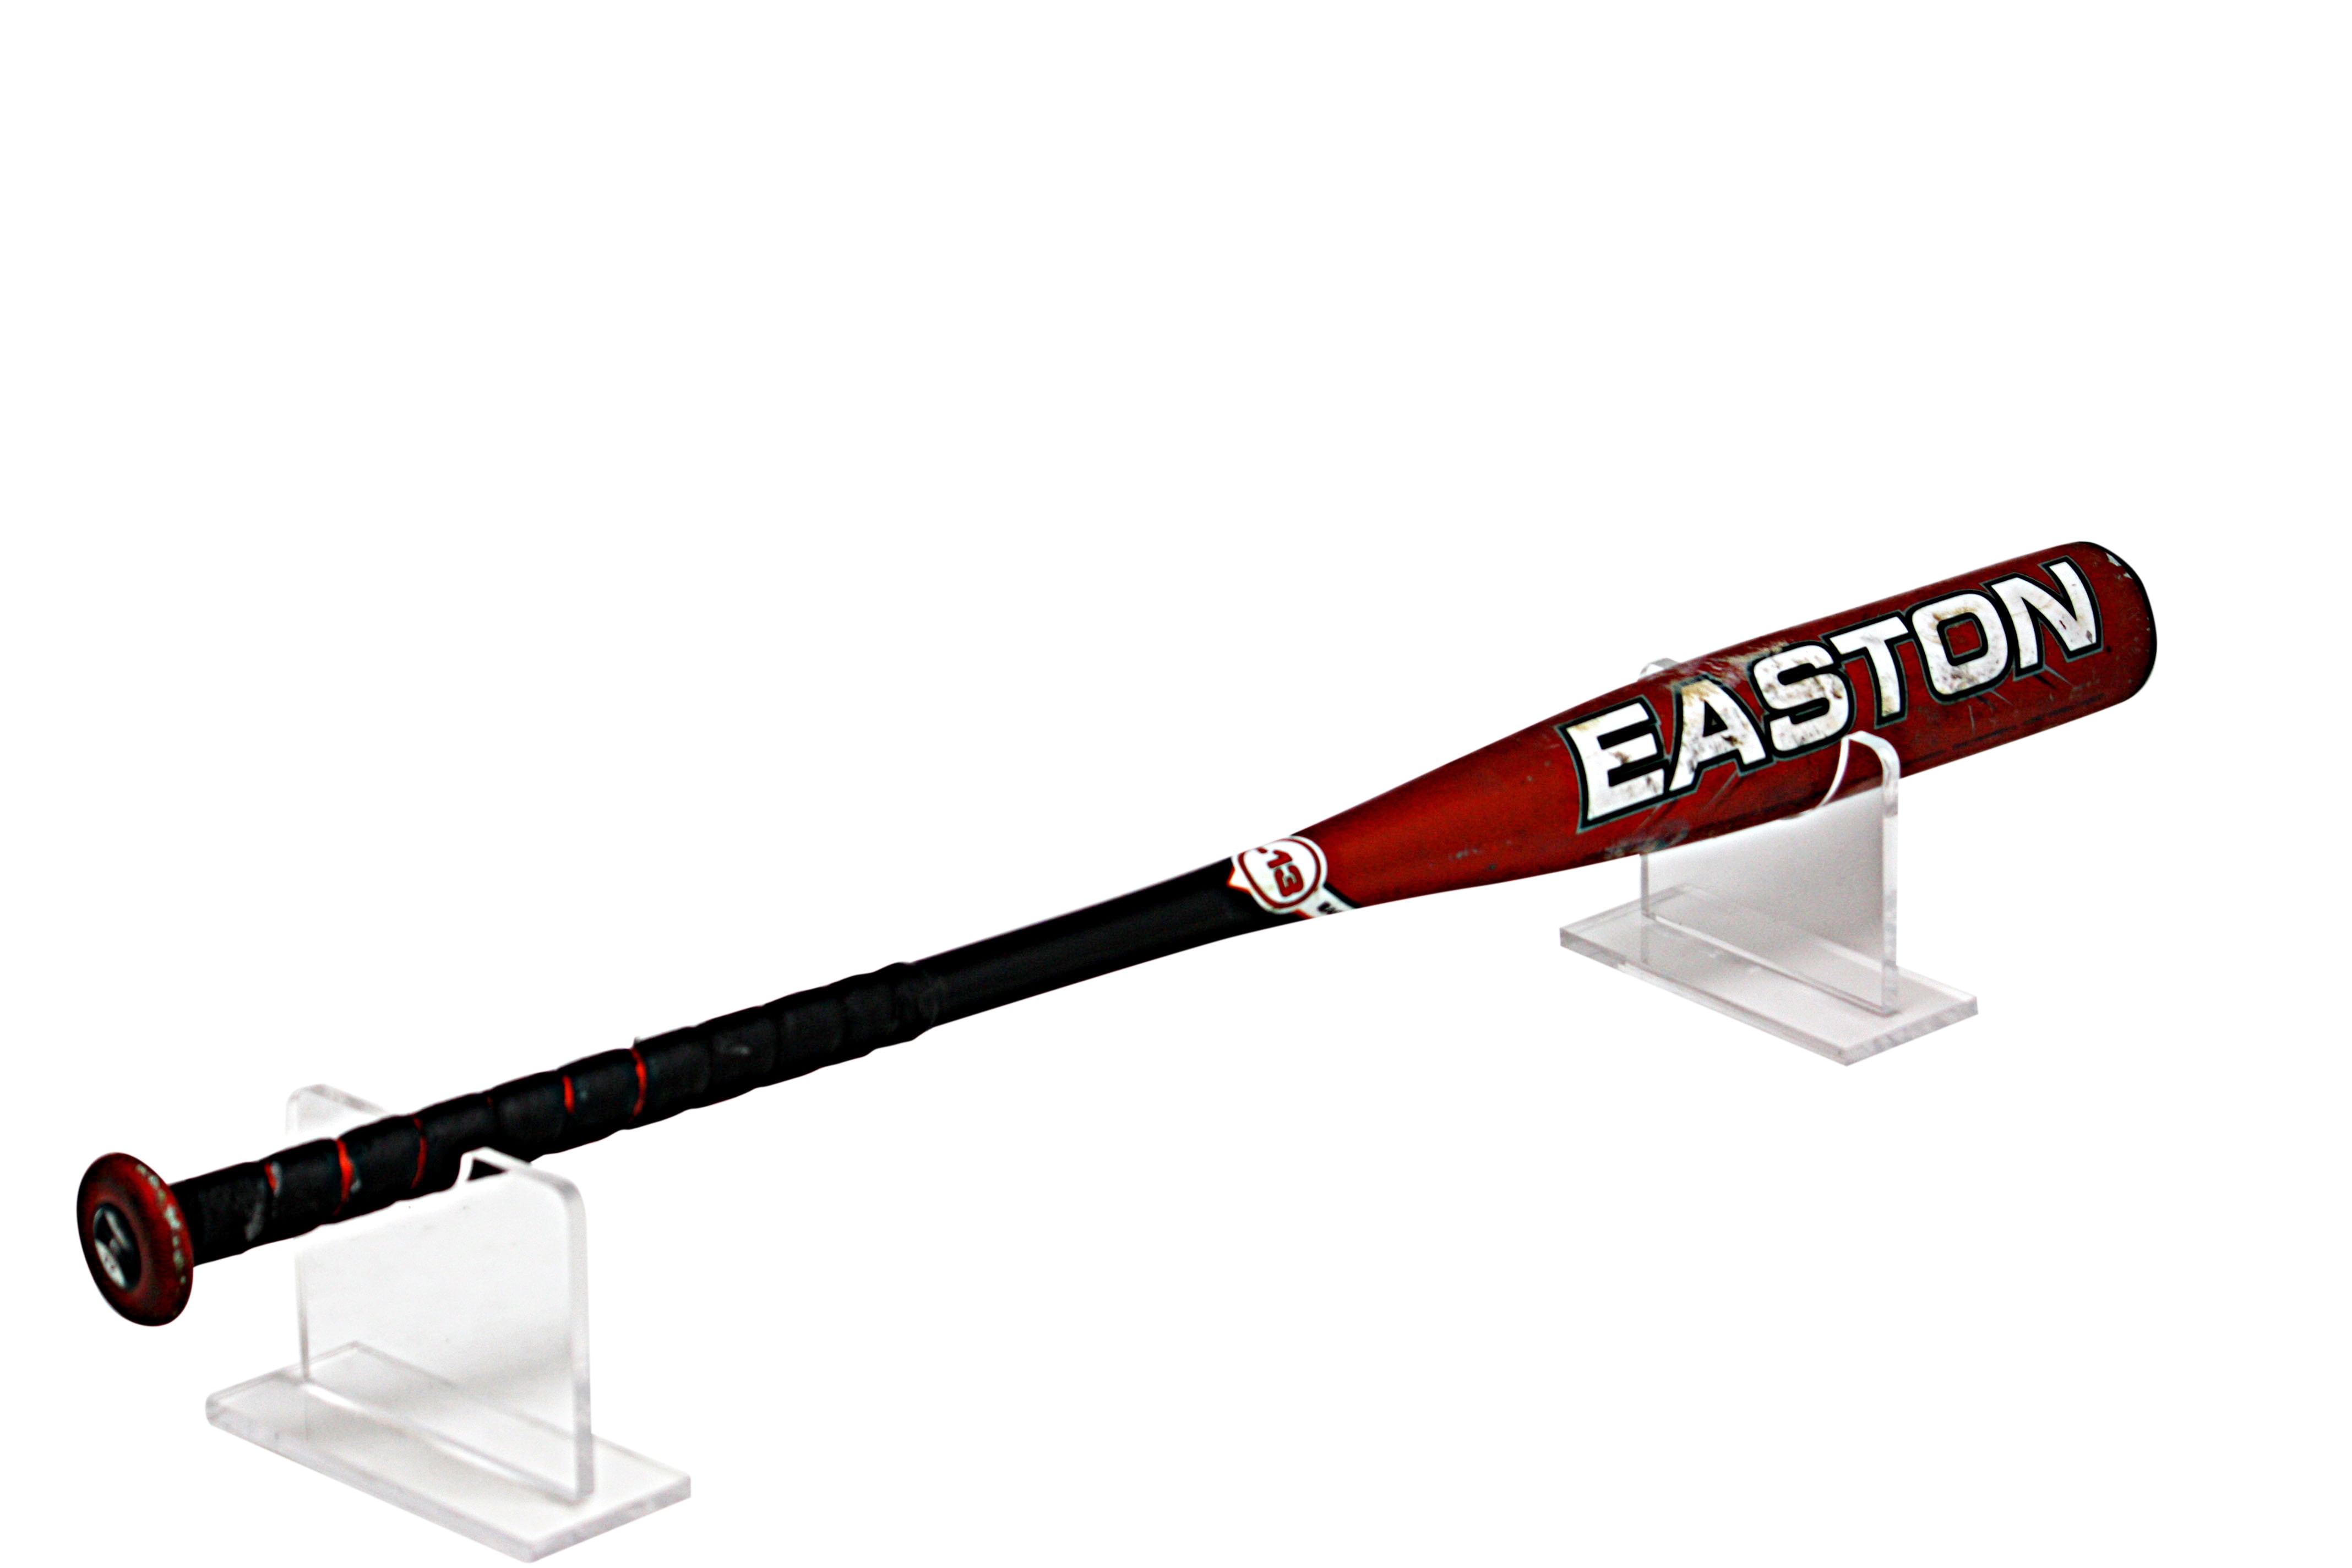 Deluxe Clear Acrylic Horizontal Table, Baseball Bat Storage Bin